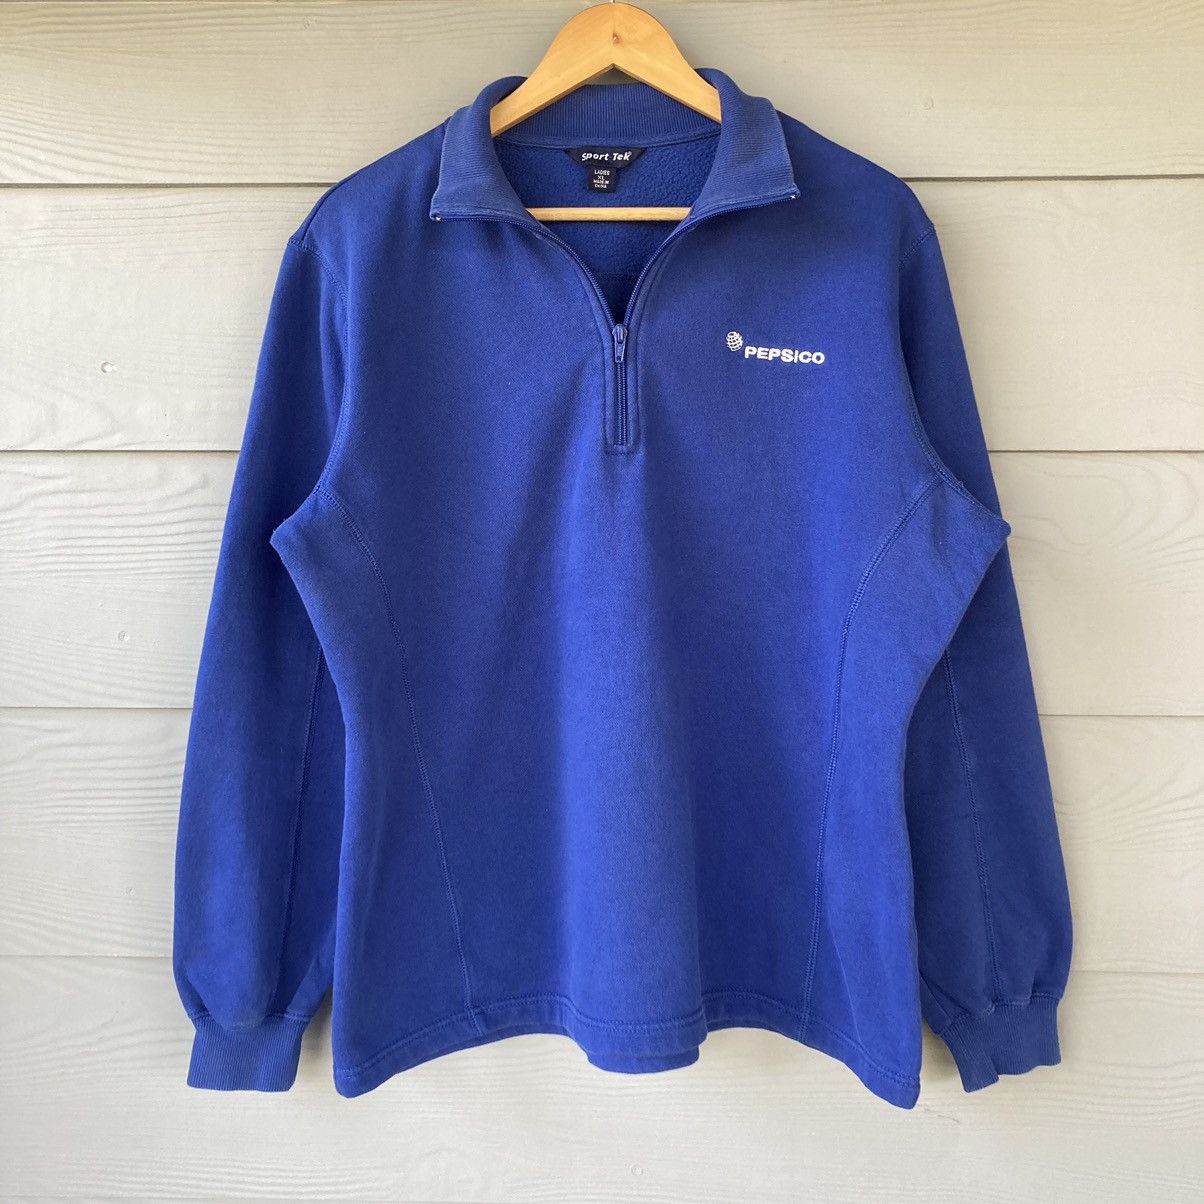 Vintage Pepsico Collar Sweatshirt - 1